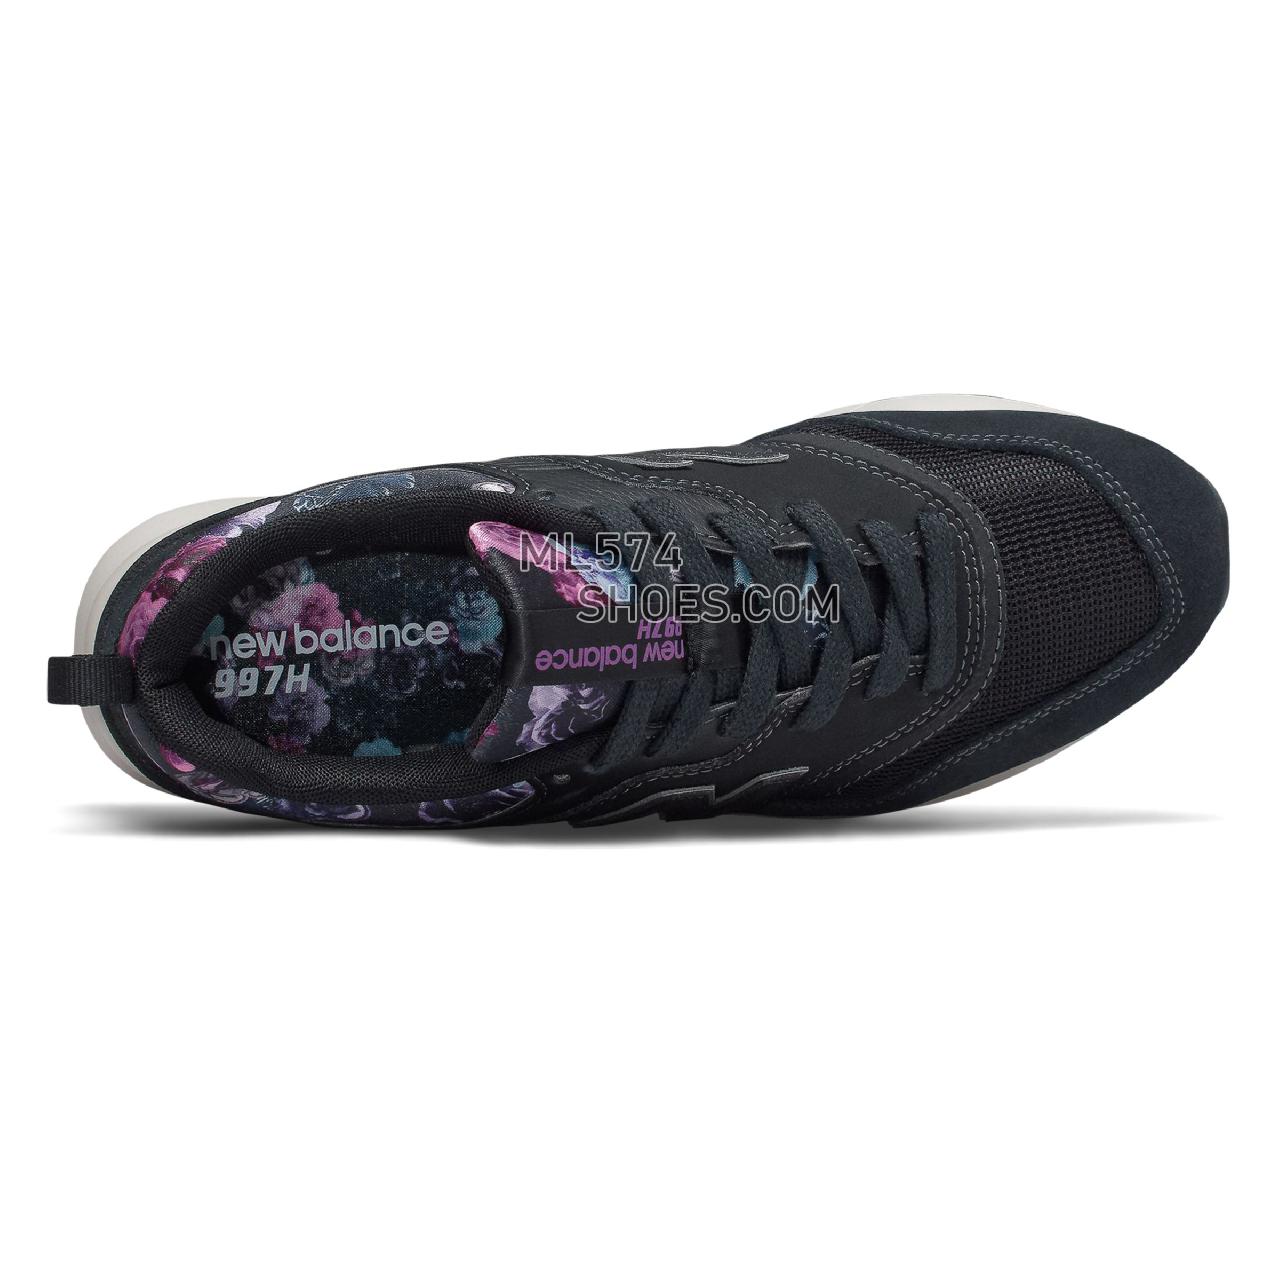 New Balance 997H - Women's Classic Sneakers - Black with Kite Purple - CW997HXG